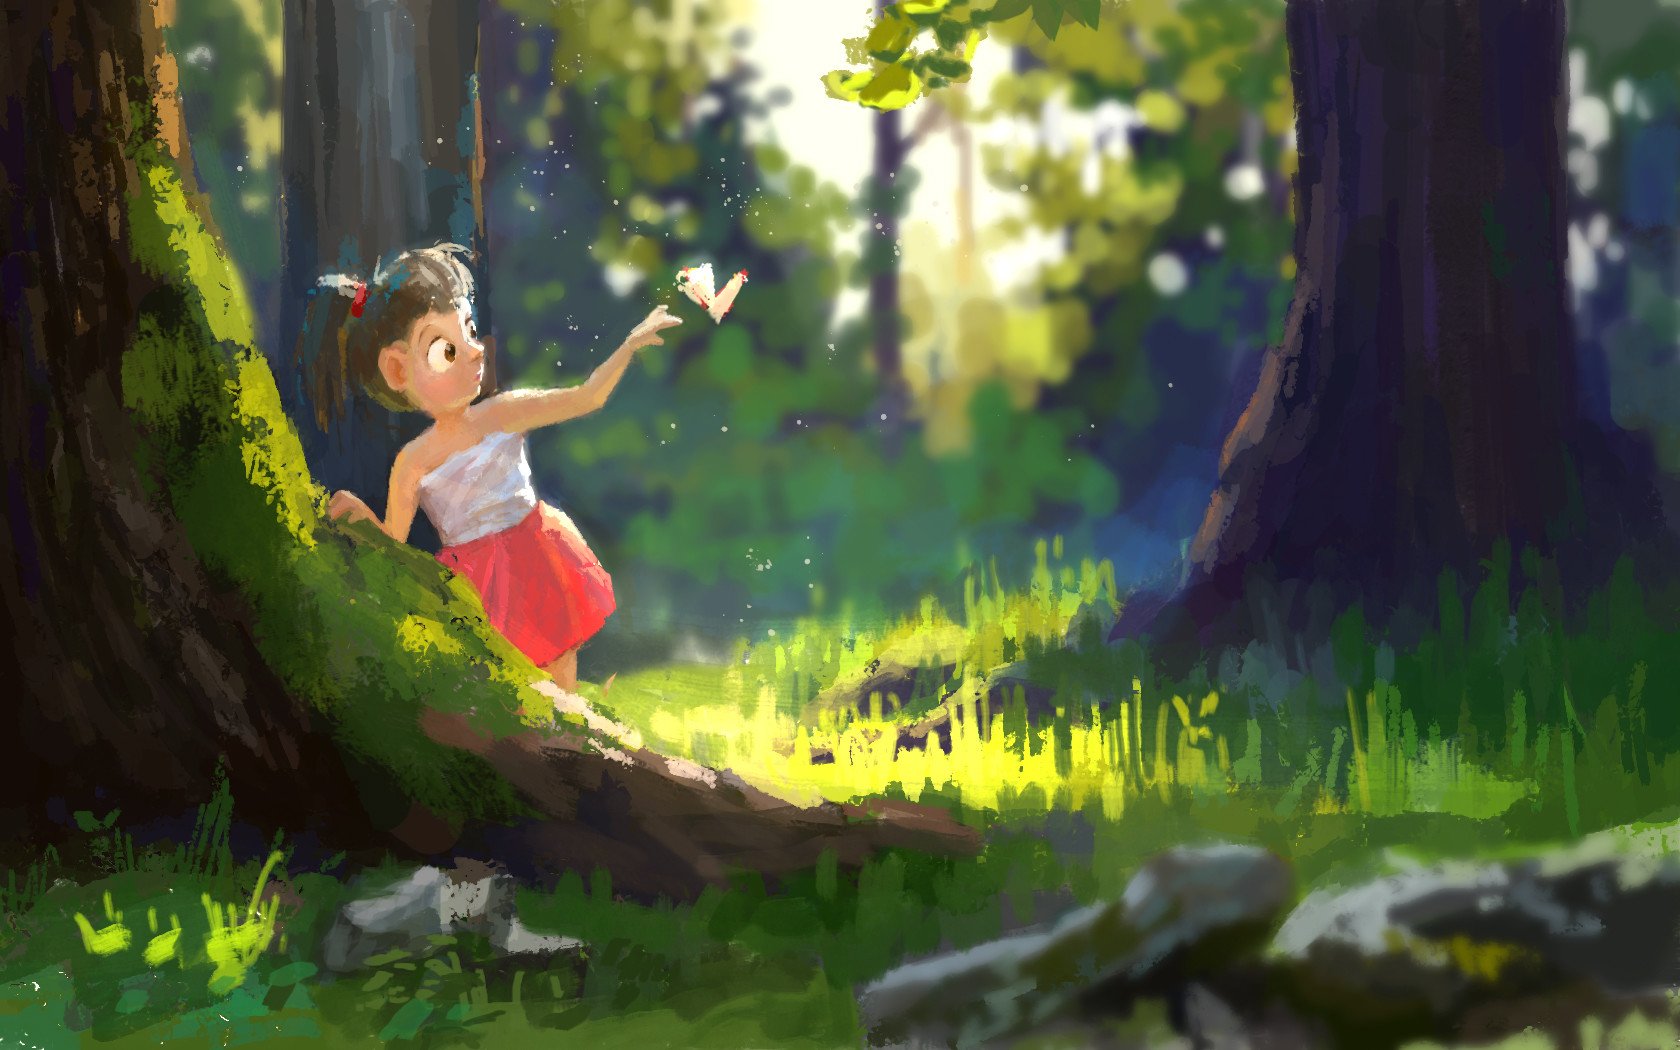 Включи девочку в лесу. Девочка в лесу. Лесная девочка. Девочка в лесу рисунок. Девочка в волшебном лесу.